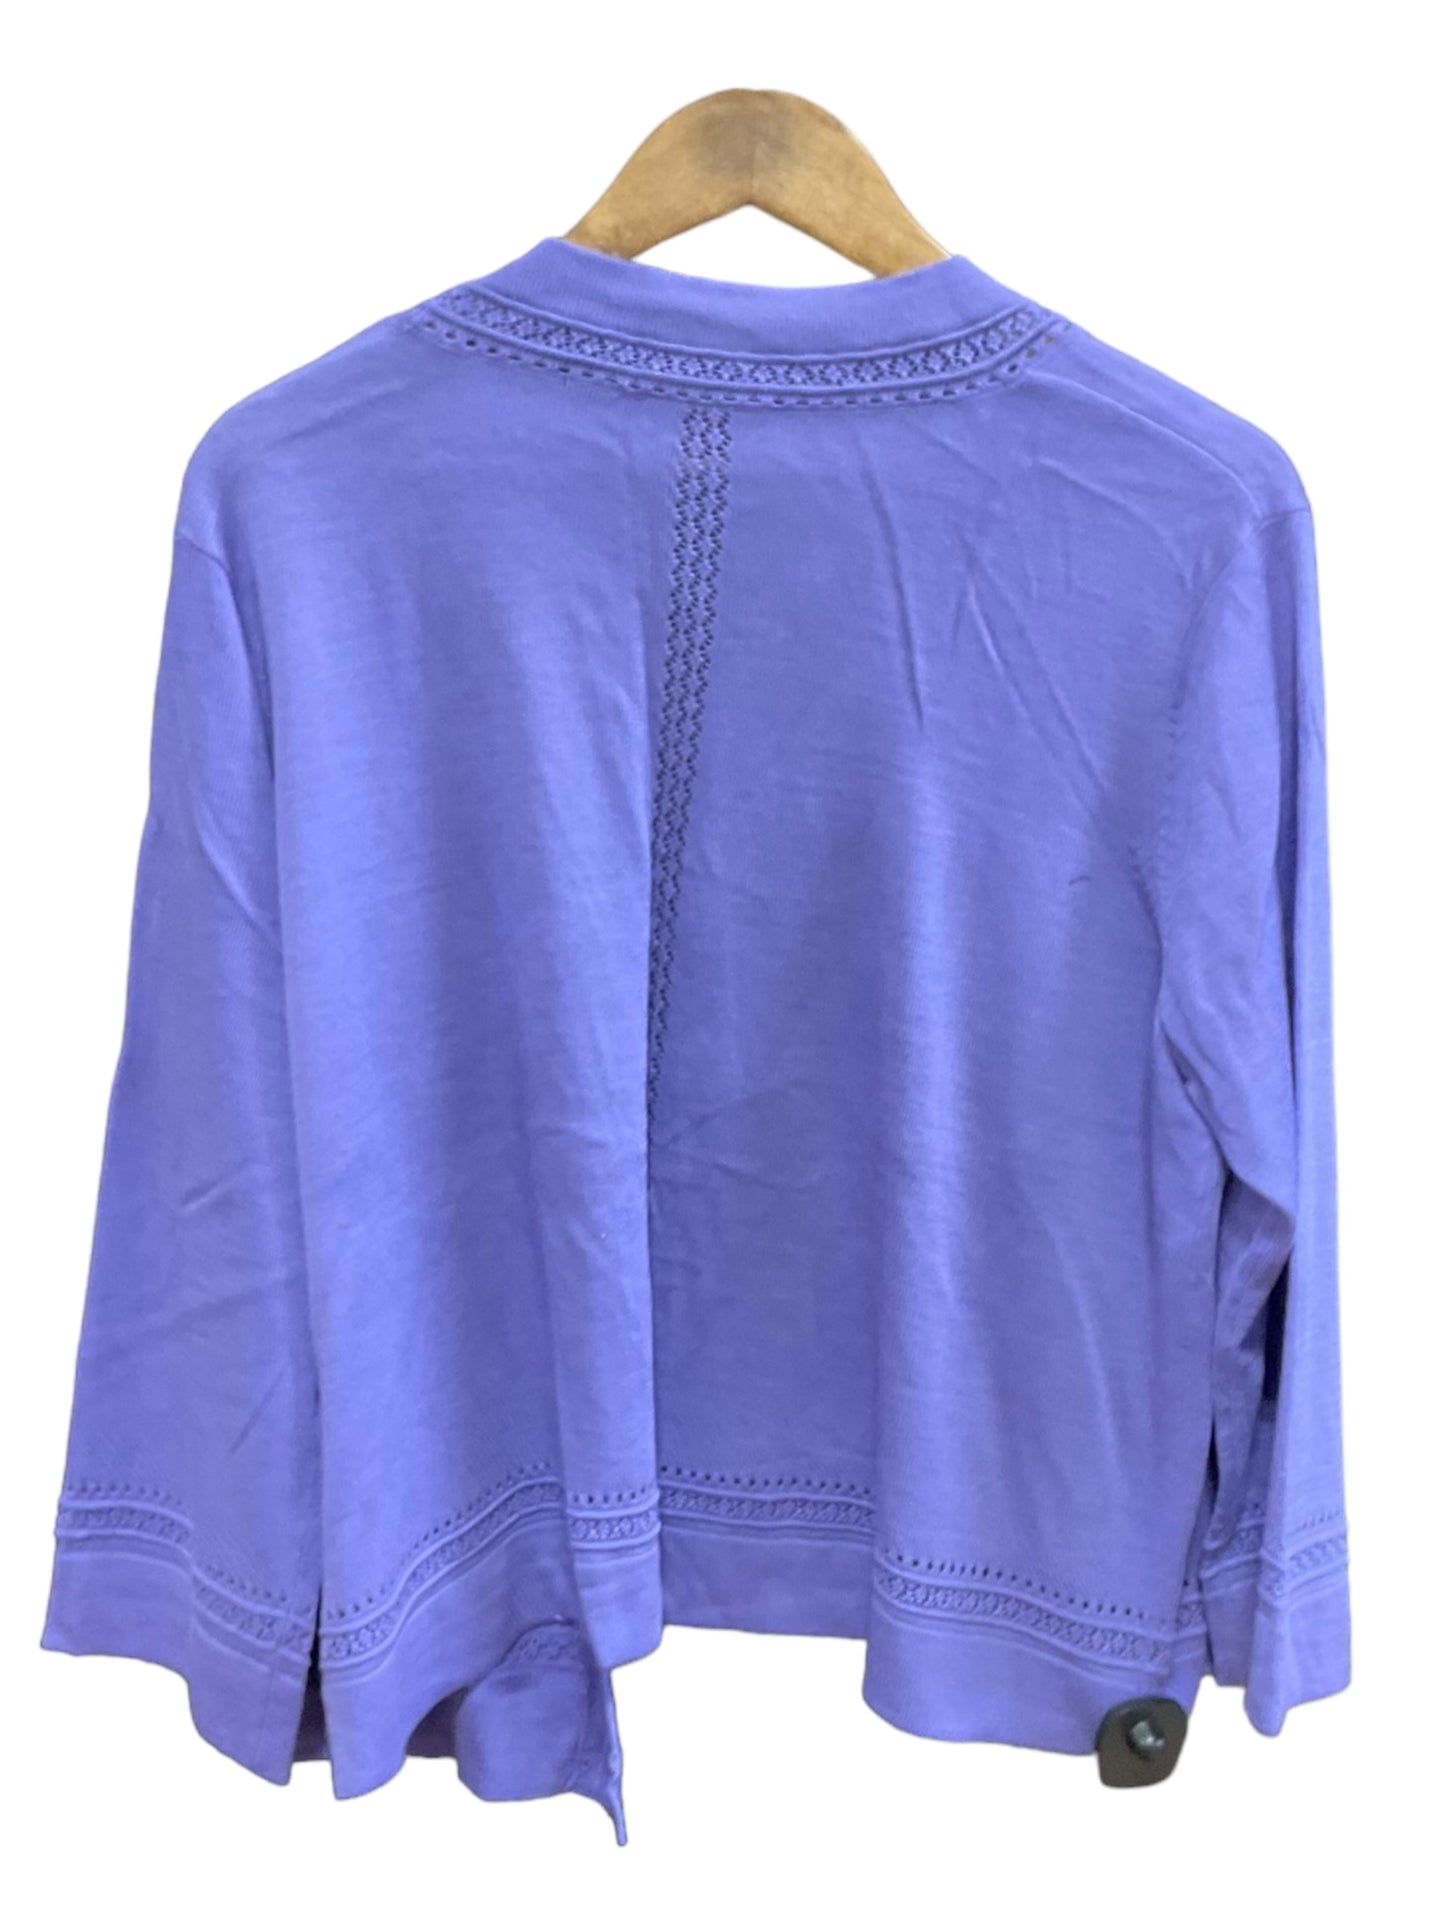 Sweater Cardigan By Nina Leonard  Size: 3x